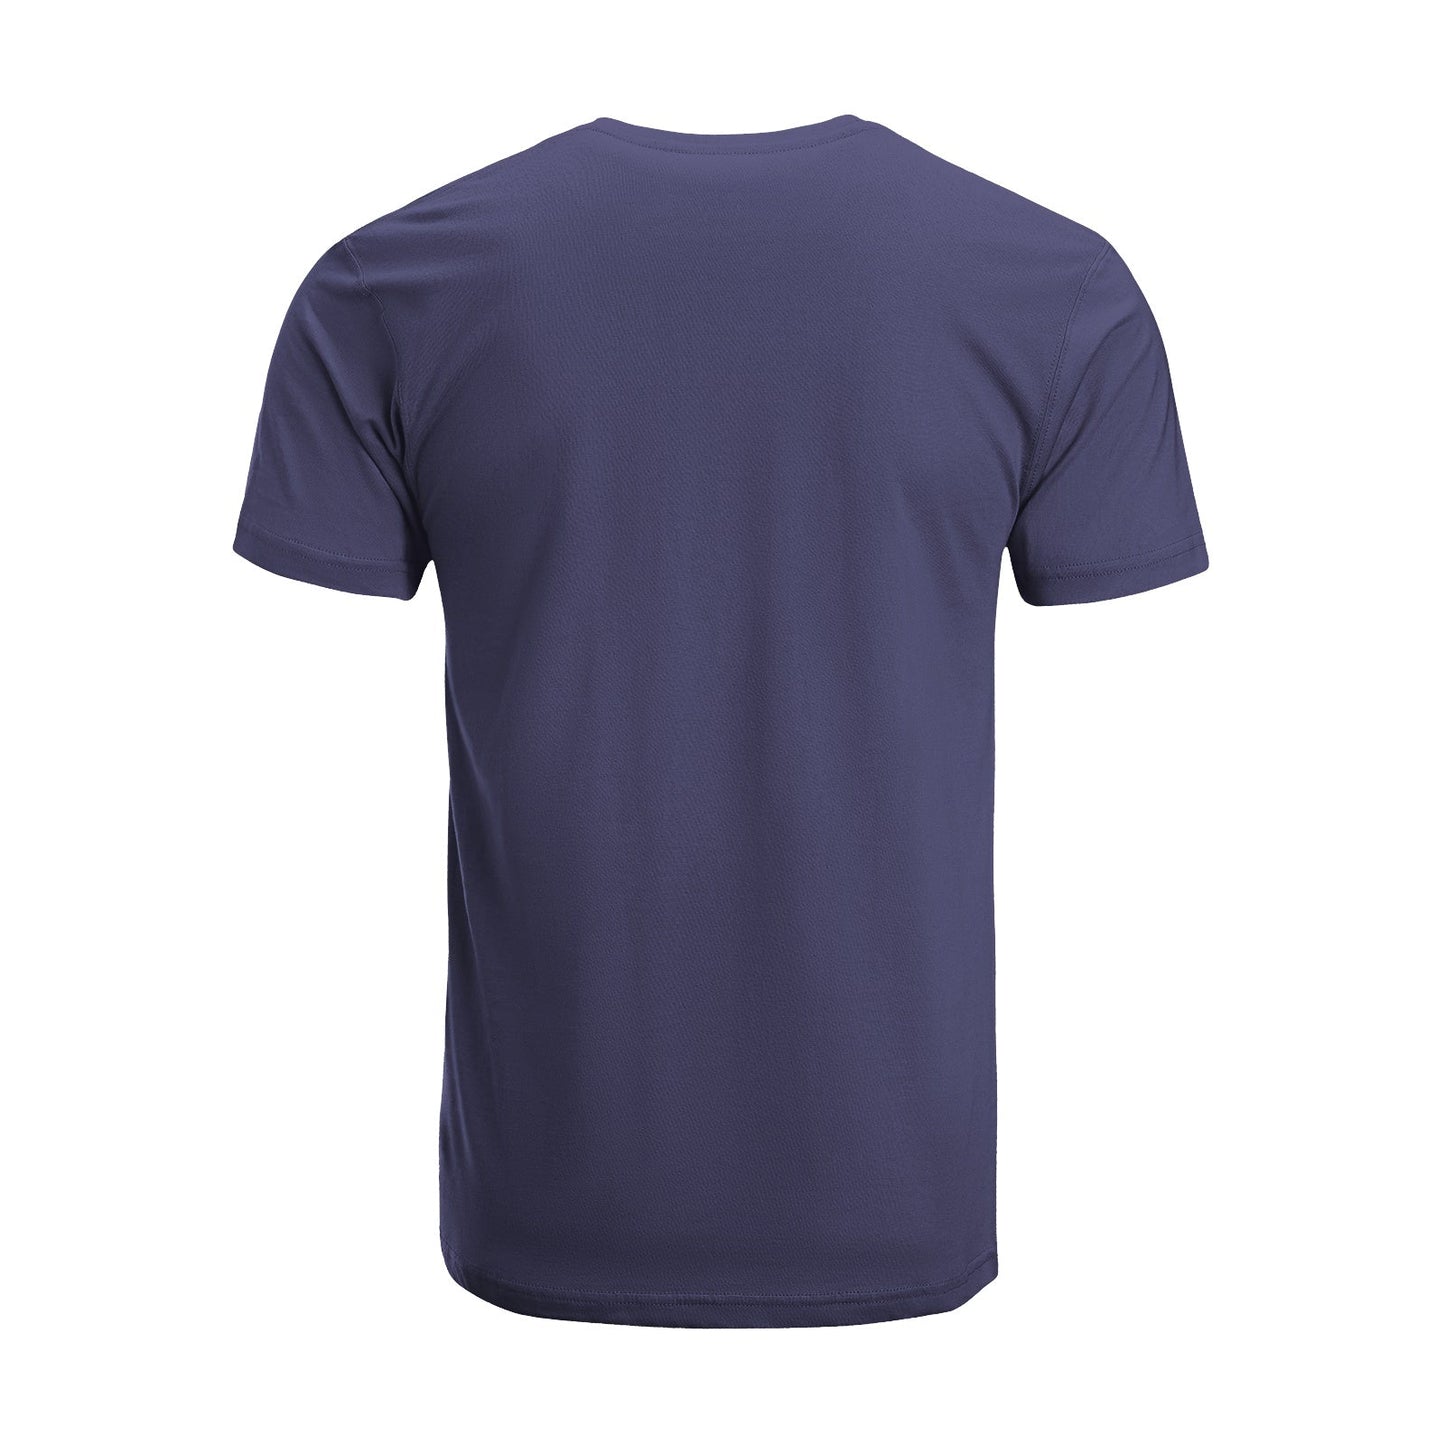 Unisex Short Sleeve Crew Neck Cotton Jersey T-Shirt CAT 31 - Tara-Outfits.com